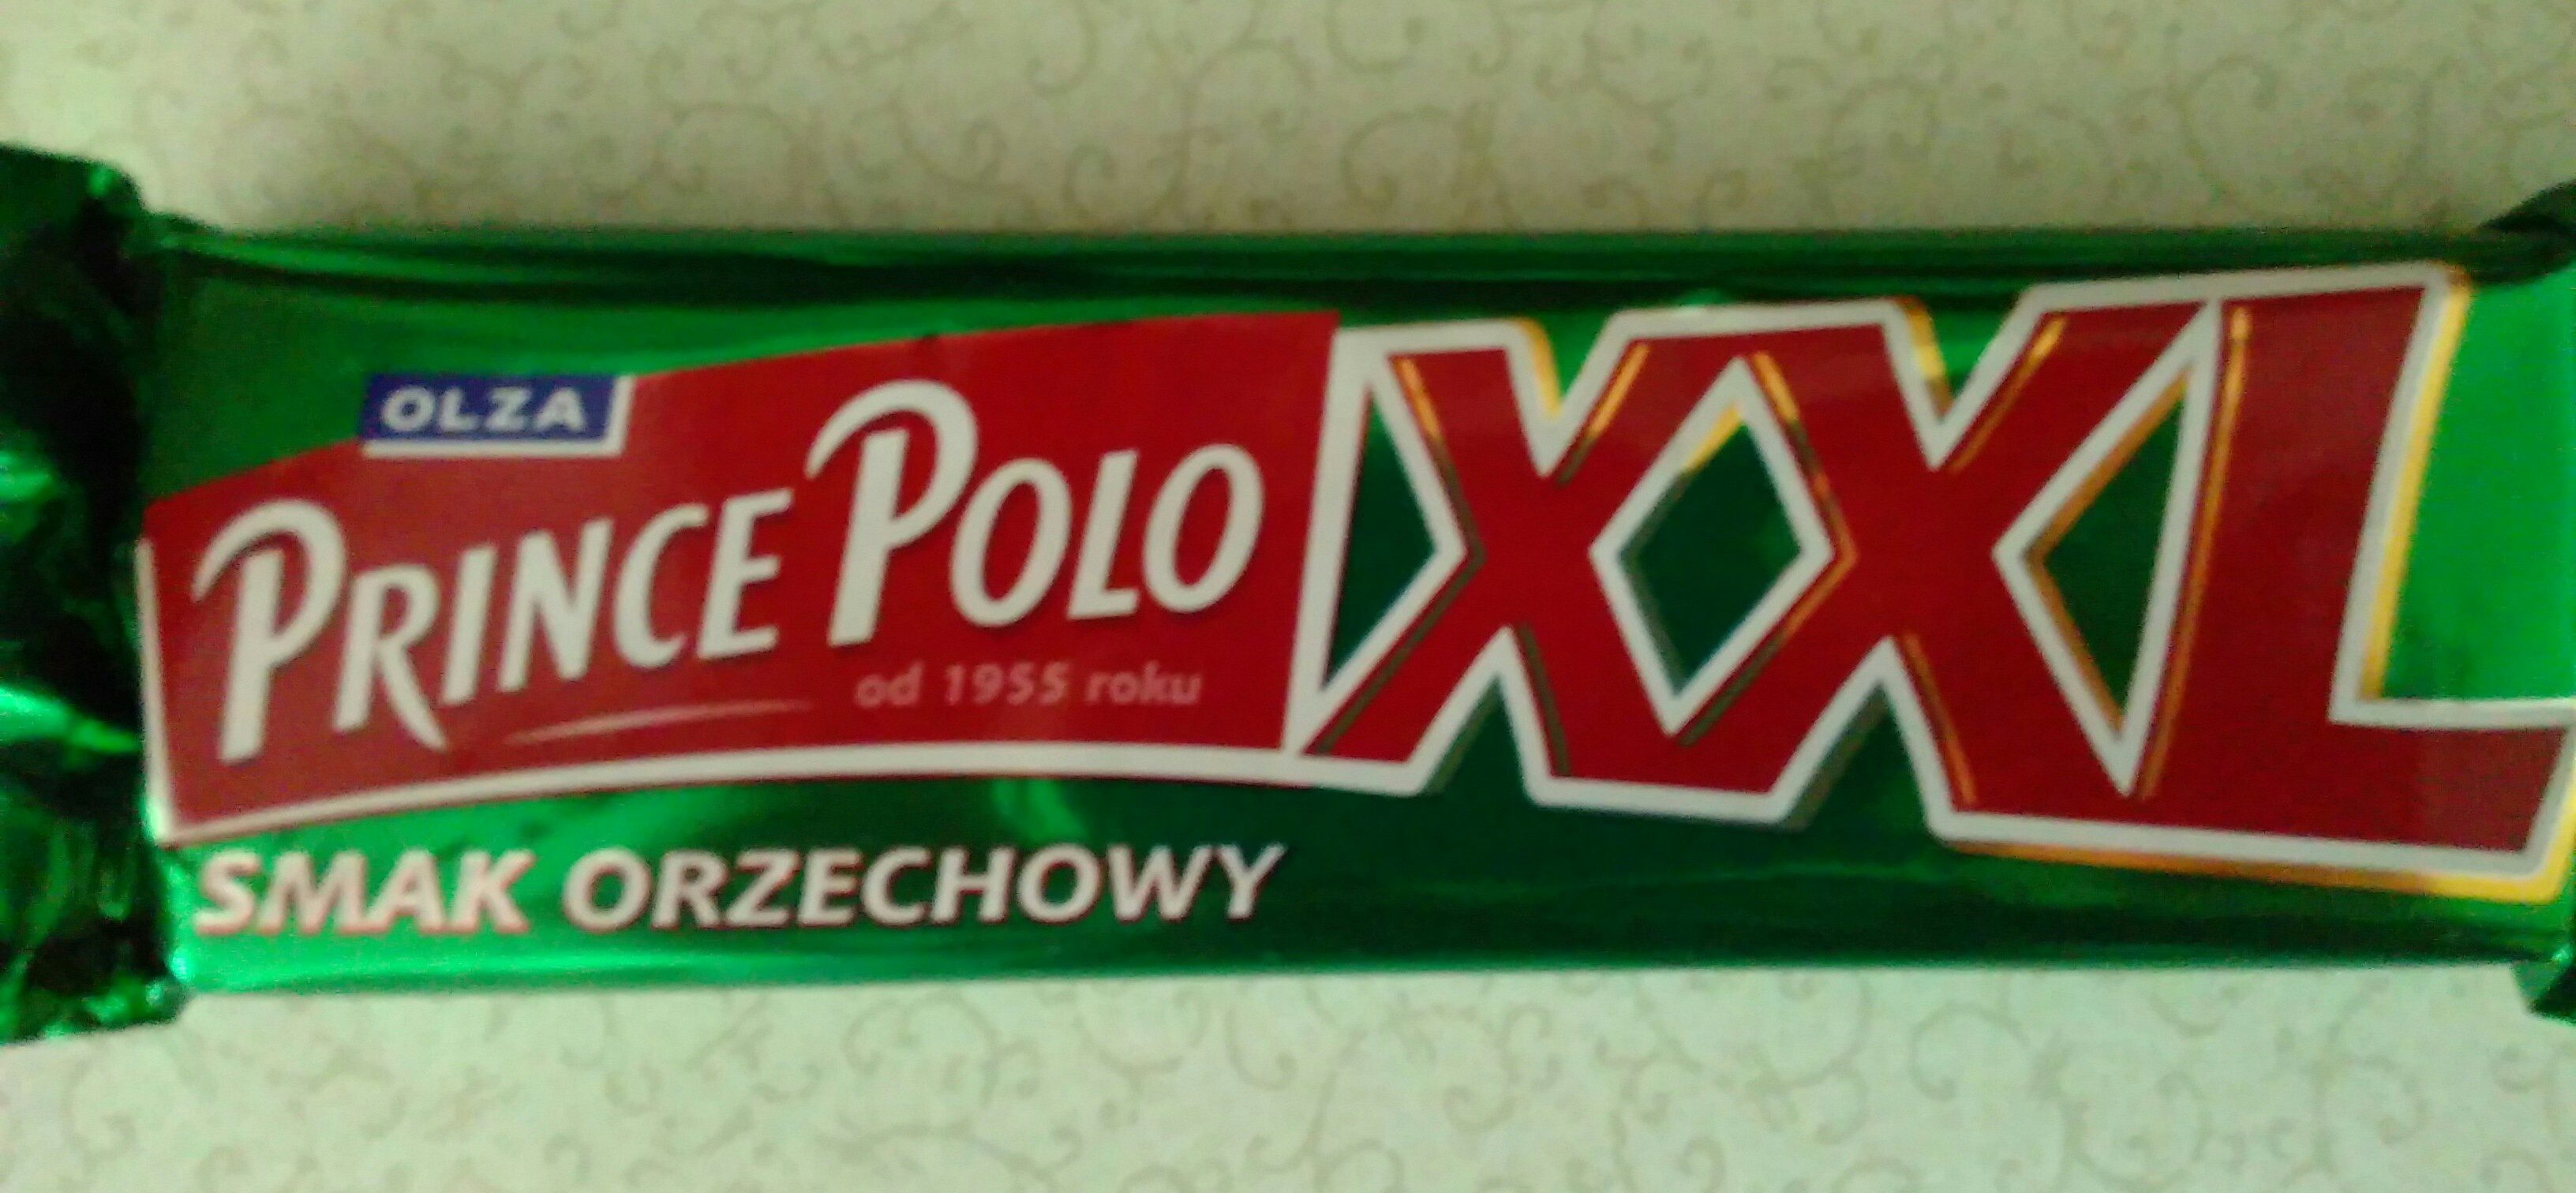 Prince Polo XXL Smak Orzechowy - Product - en